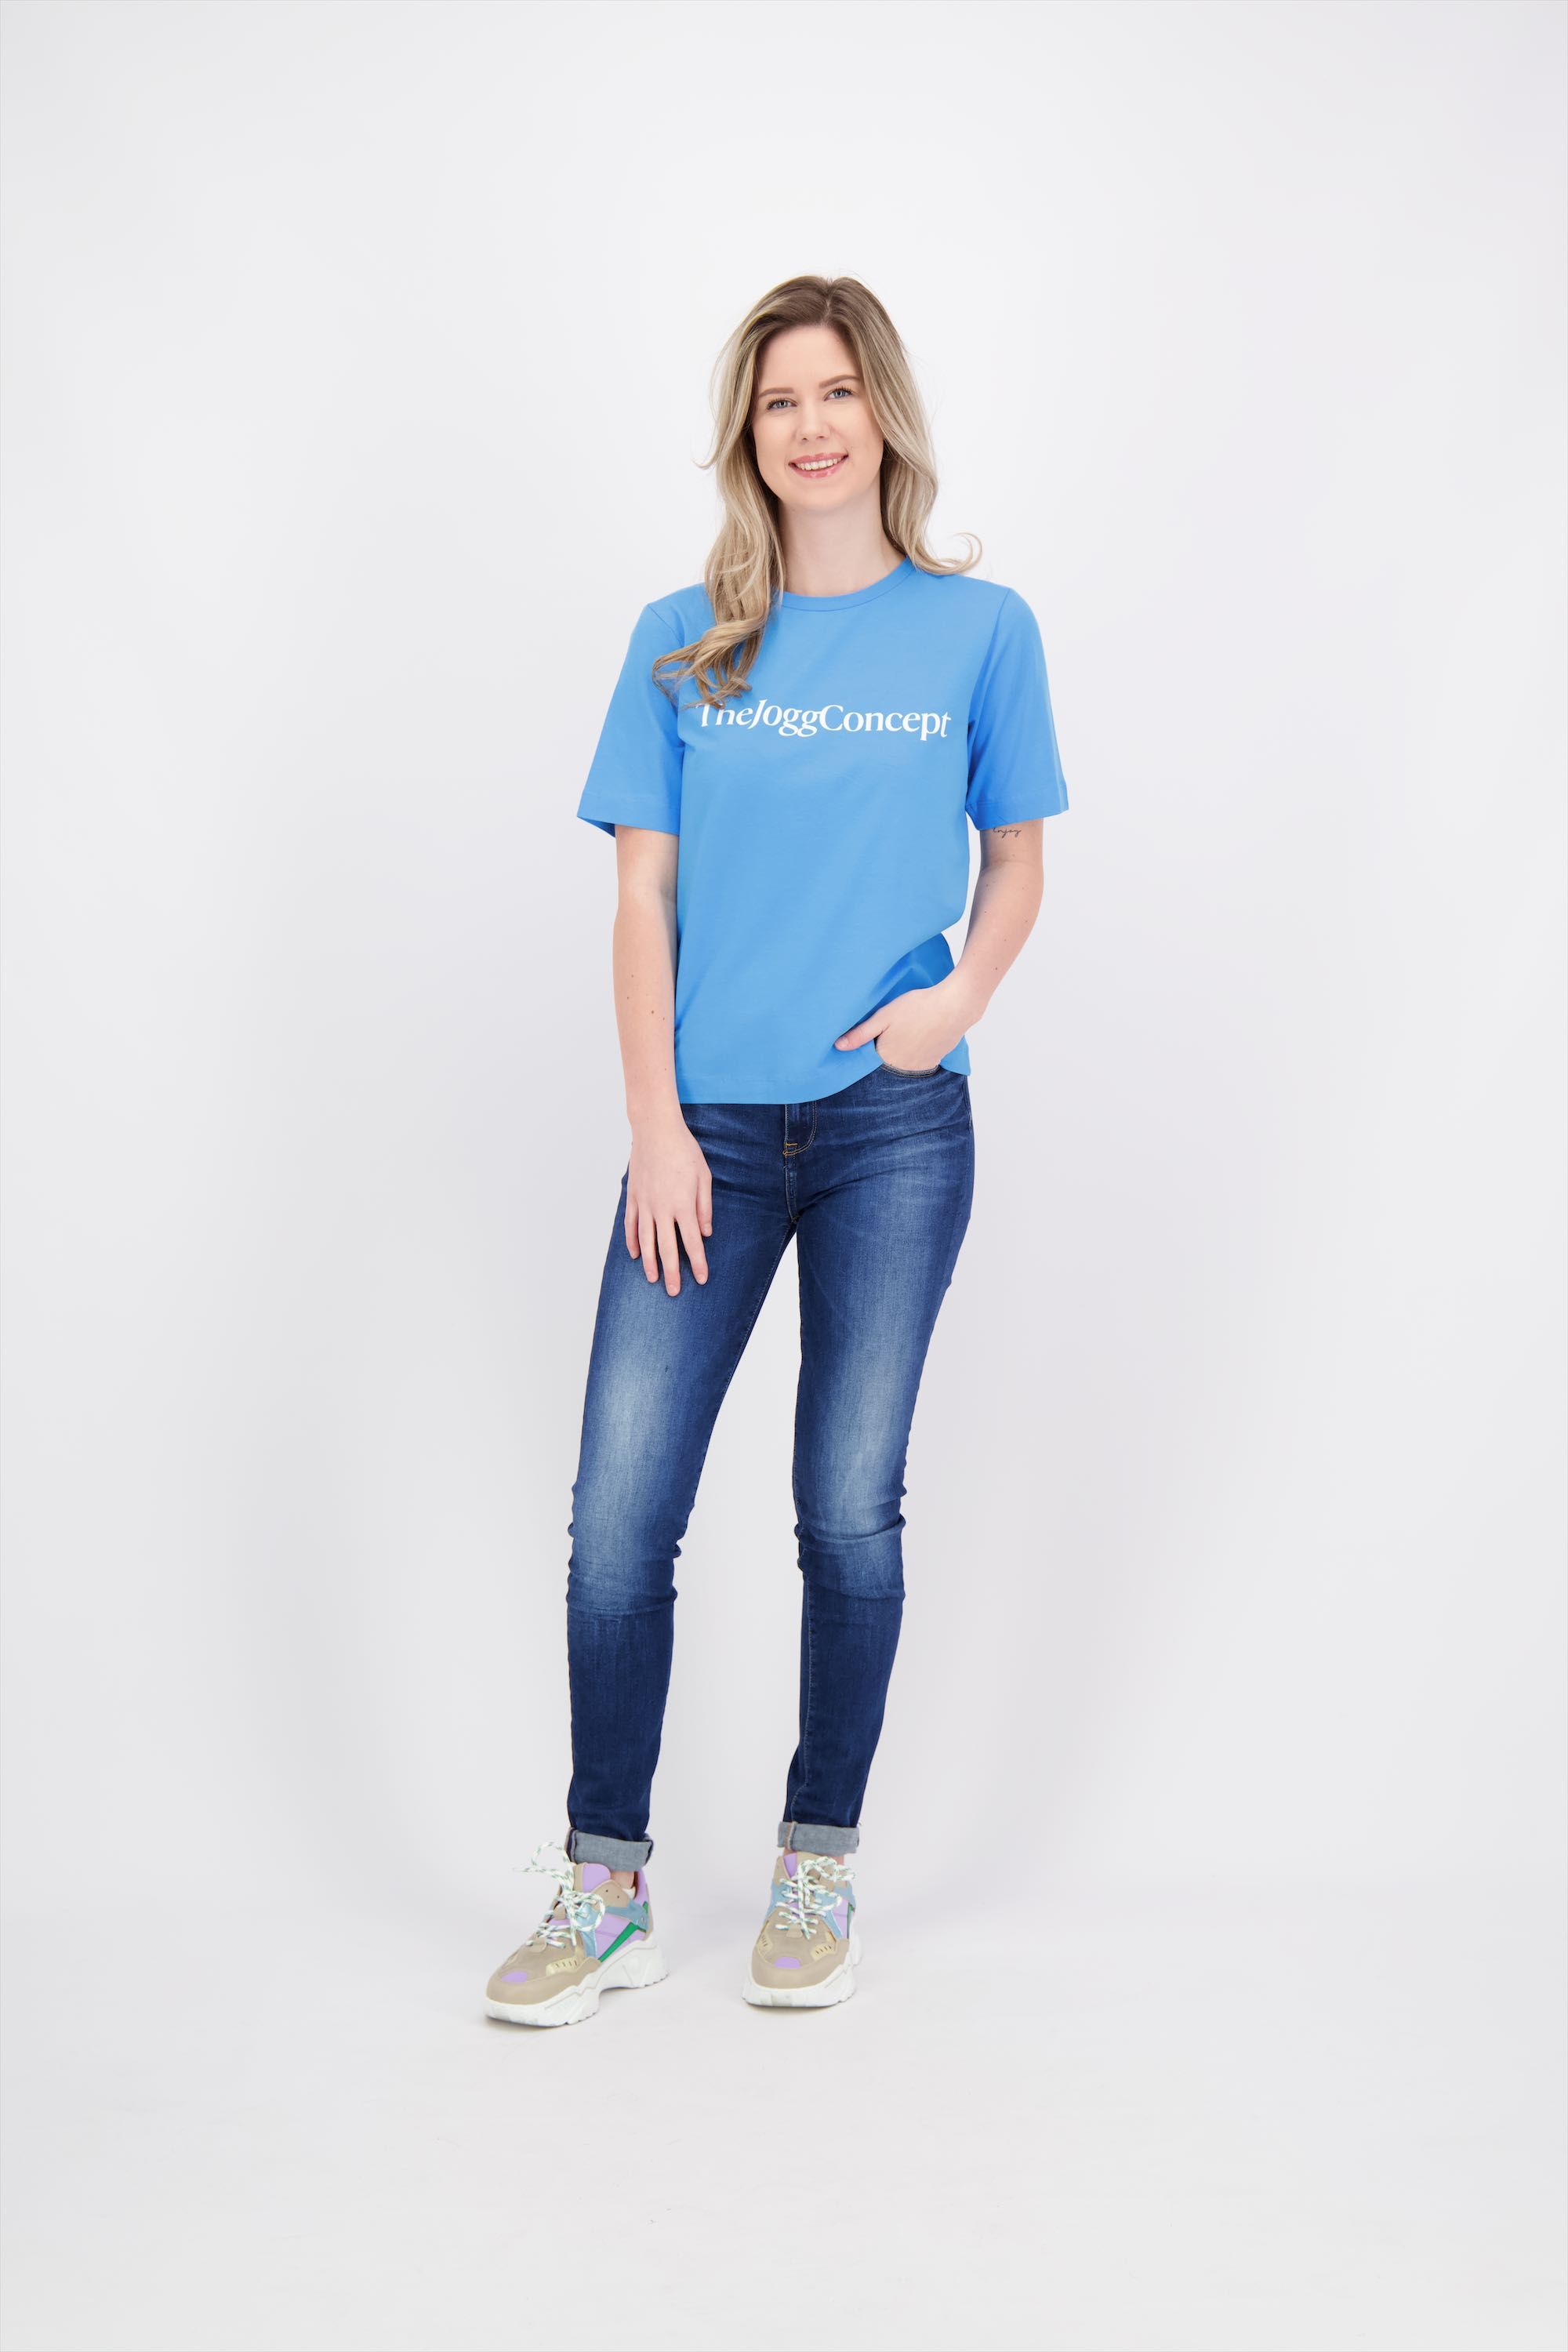 The Jogg Concept T-Shirt Simona Blauw